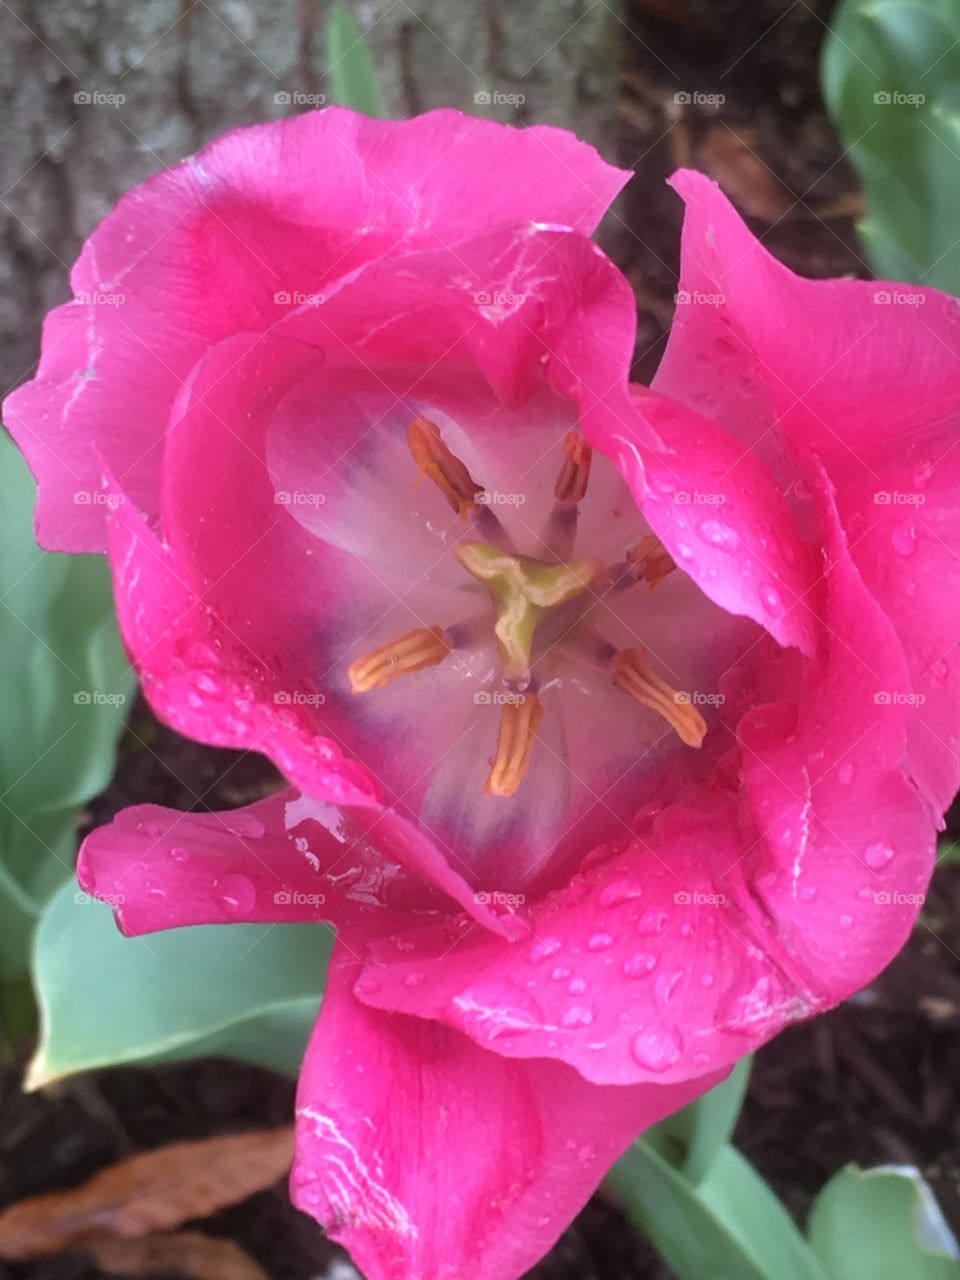 Inside the tulip on a rainy day